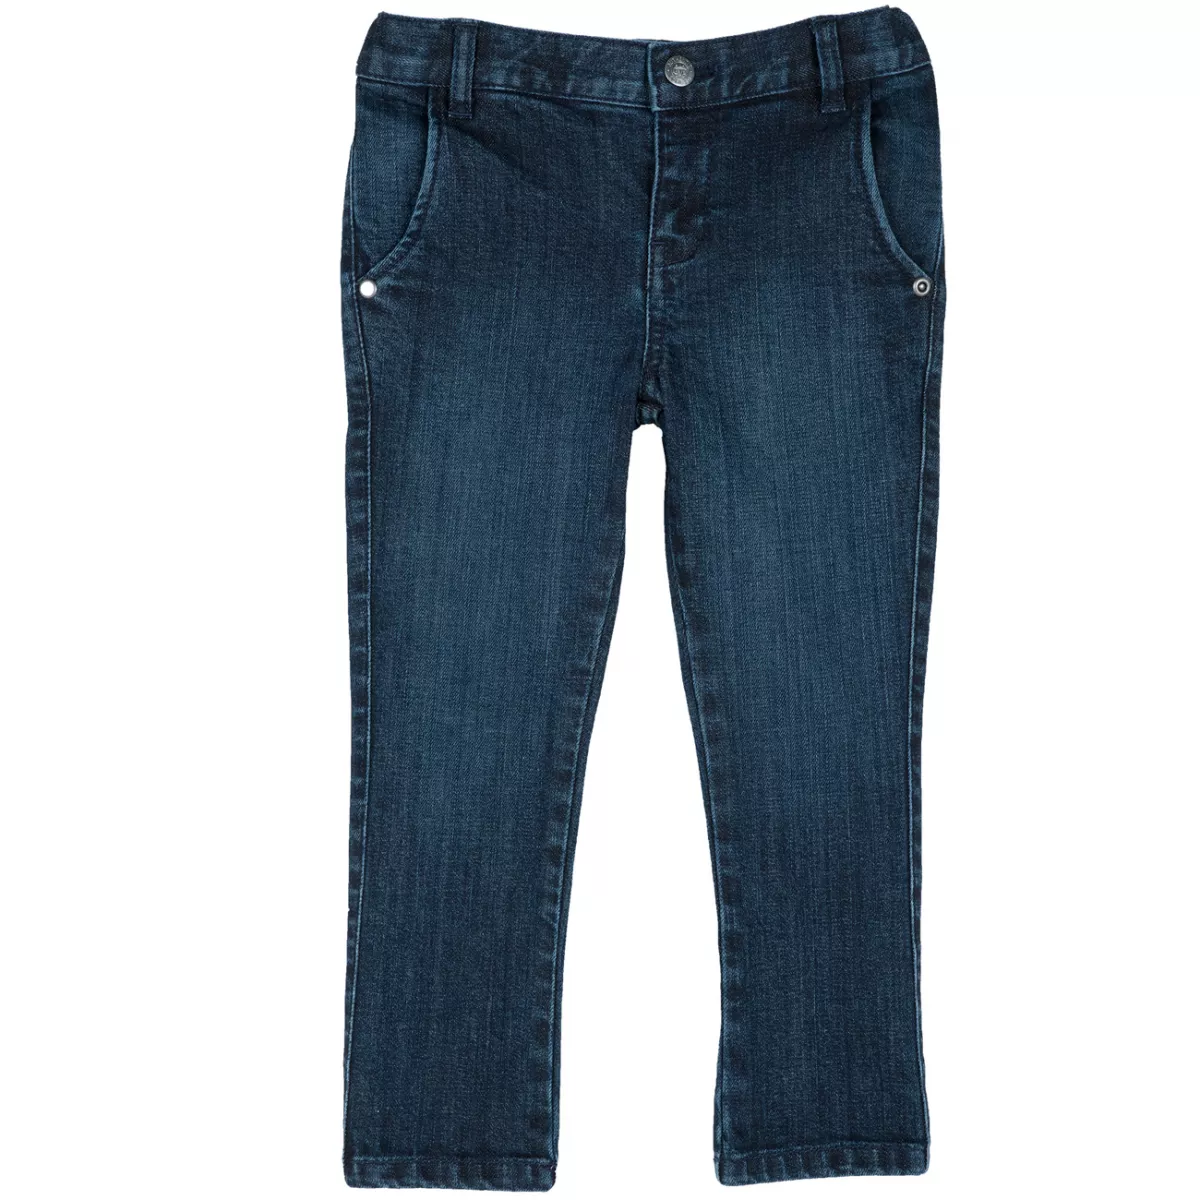 Pantaloni jeans copii Chicco, albastru inchis, 116